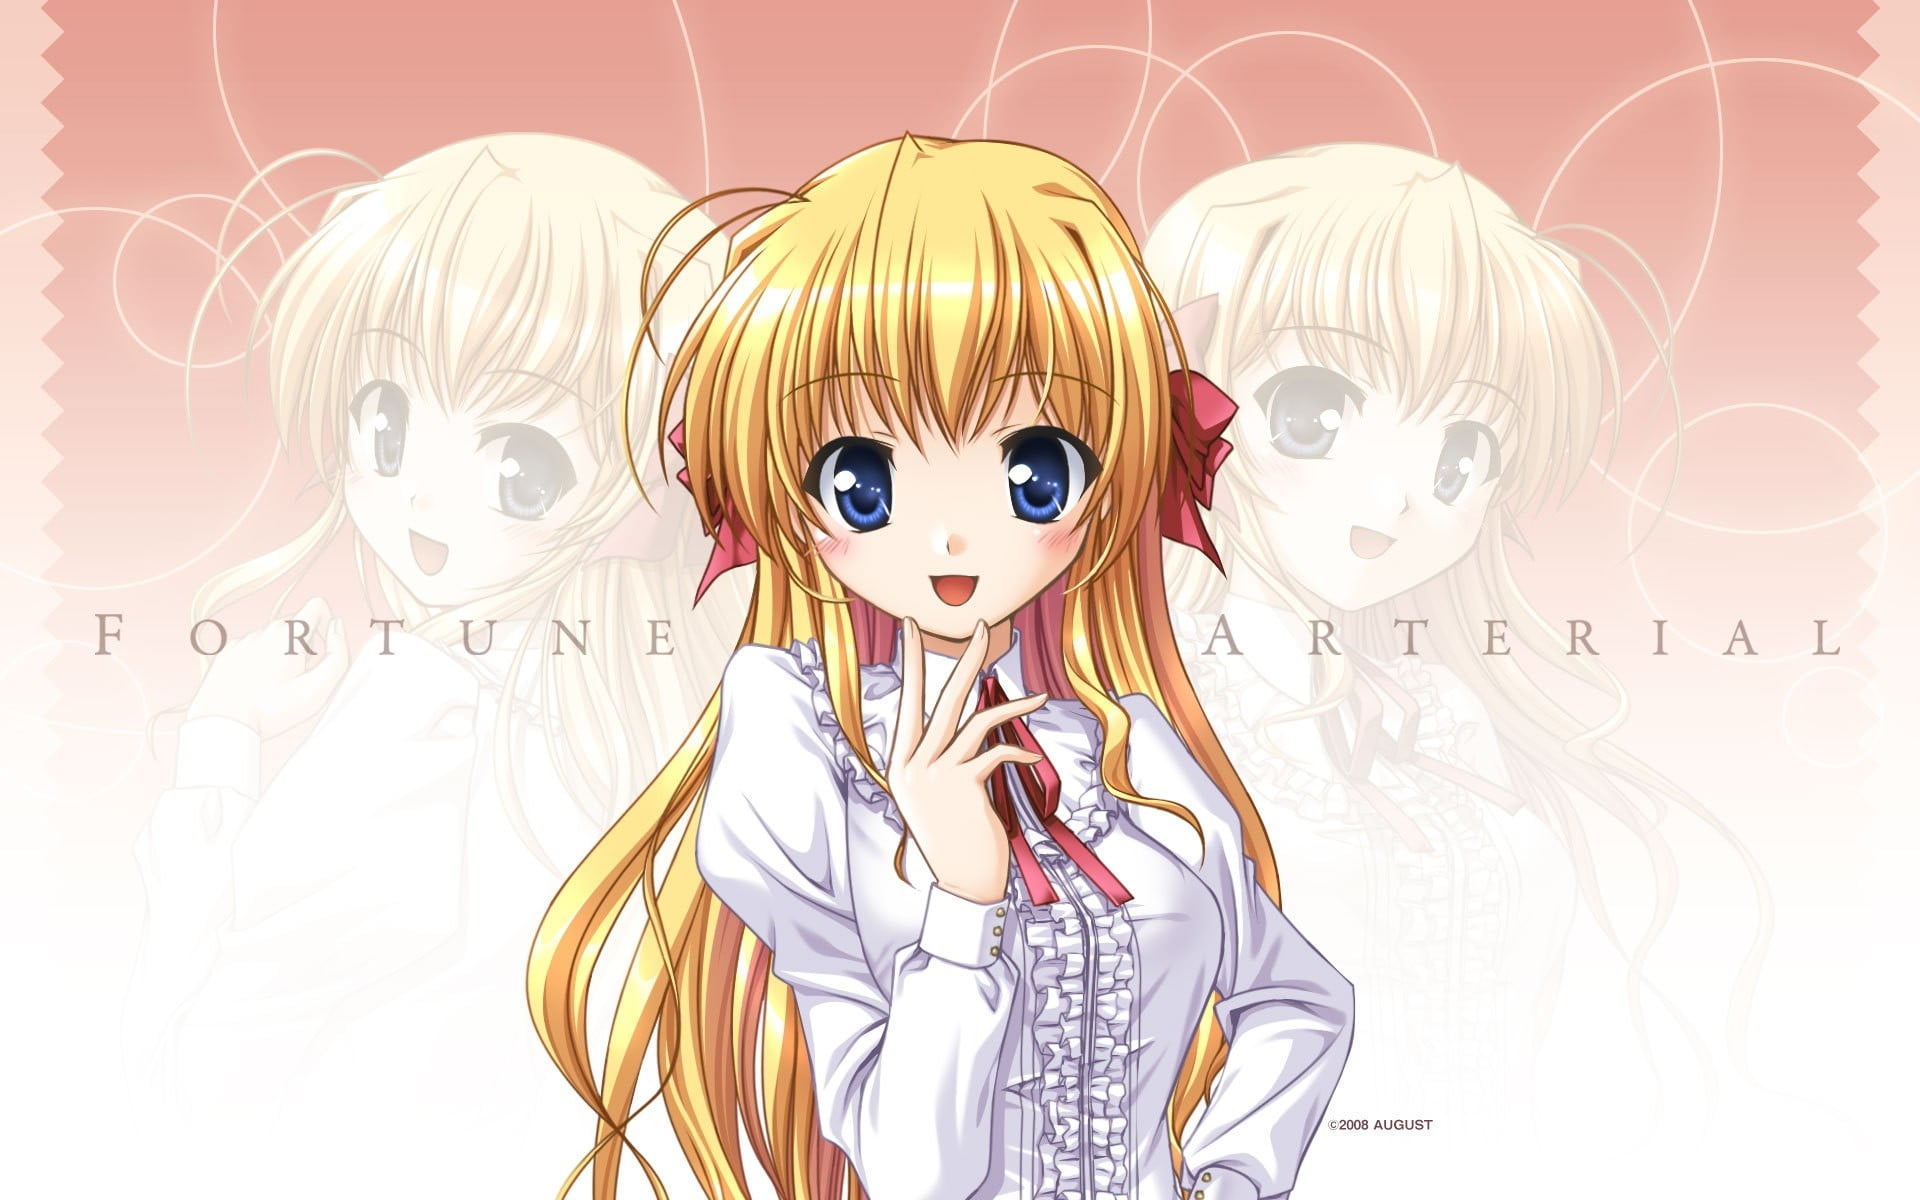 blond-haired female anime character in white long-sleeved dress